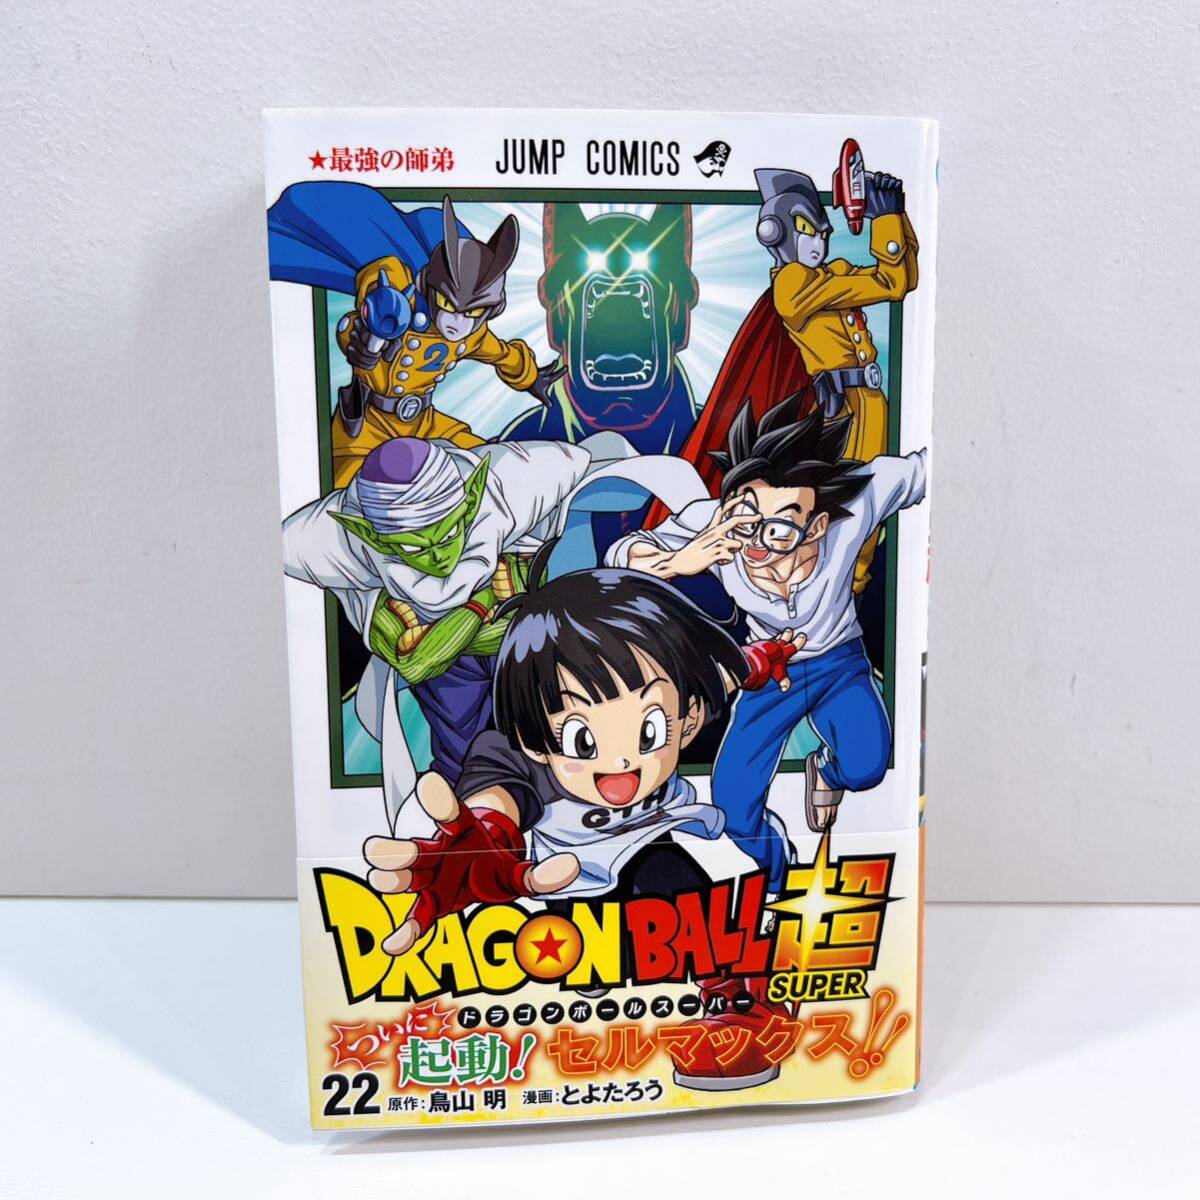 319* б/у * Dragon Ball супер 1~22 шт ( новейший ) Toriyama Akira ..... Shueisha Jump комиксы манга manga (манга) комикс с поясом оби текущее состояние товар 